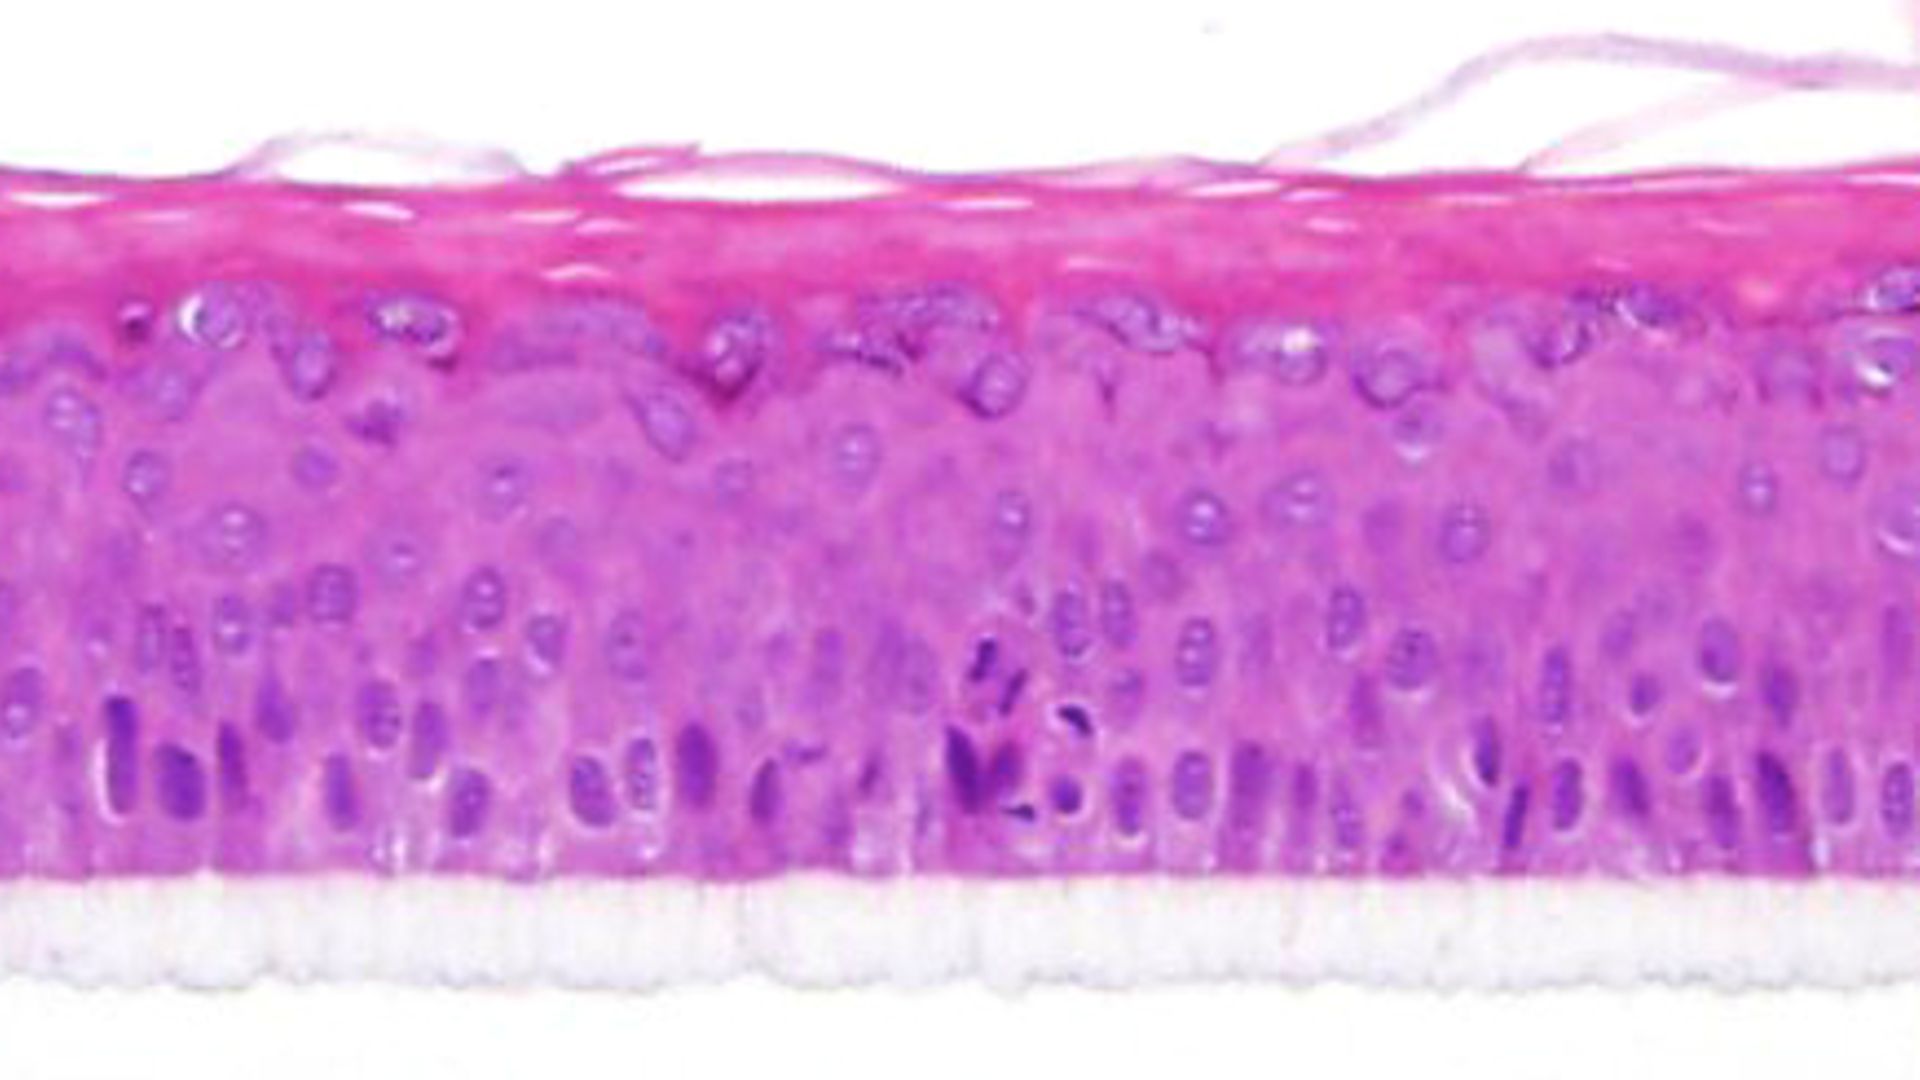 Mikroskopische Aufnahme eines epiCS®-Hautmodells